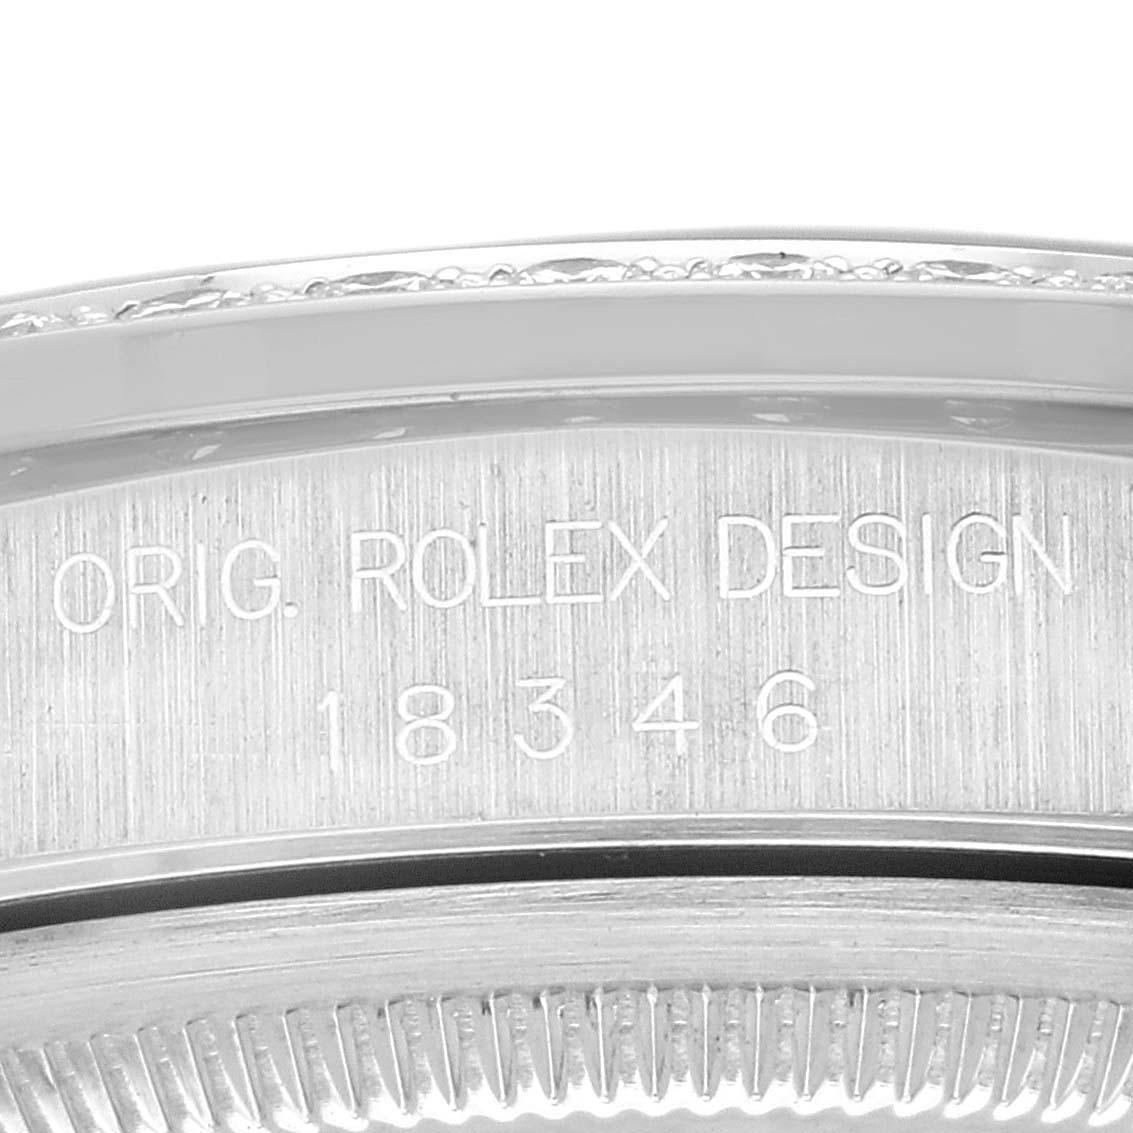 Rolex President Day-Date Platinum Blue Myriad Diamond Dial Mens Watch 18346. Officially certified chronometer self-winding movement. Platinum oyster case 36.0 mm in diameter. Rolex logo on a crown. Original Rolex factory diamond bezel. Scratch